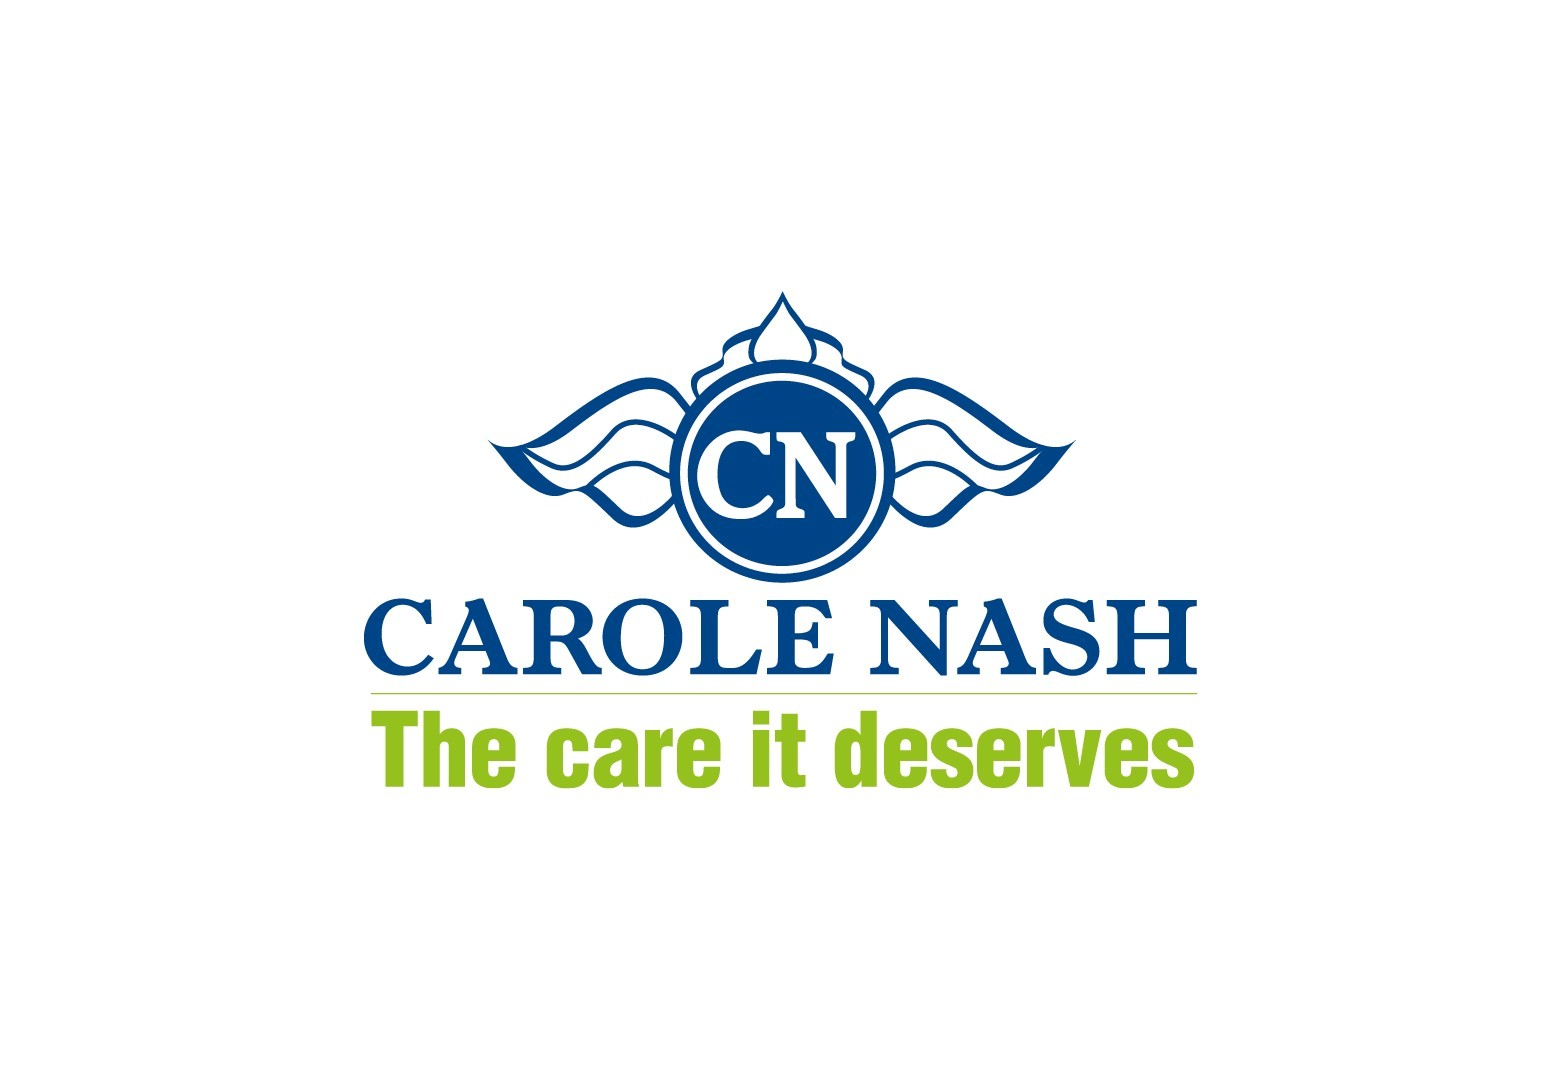 Carole Nash logo.